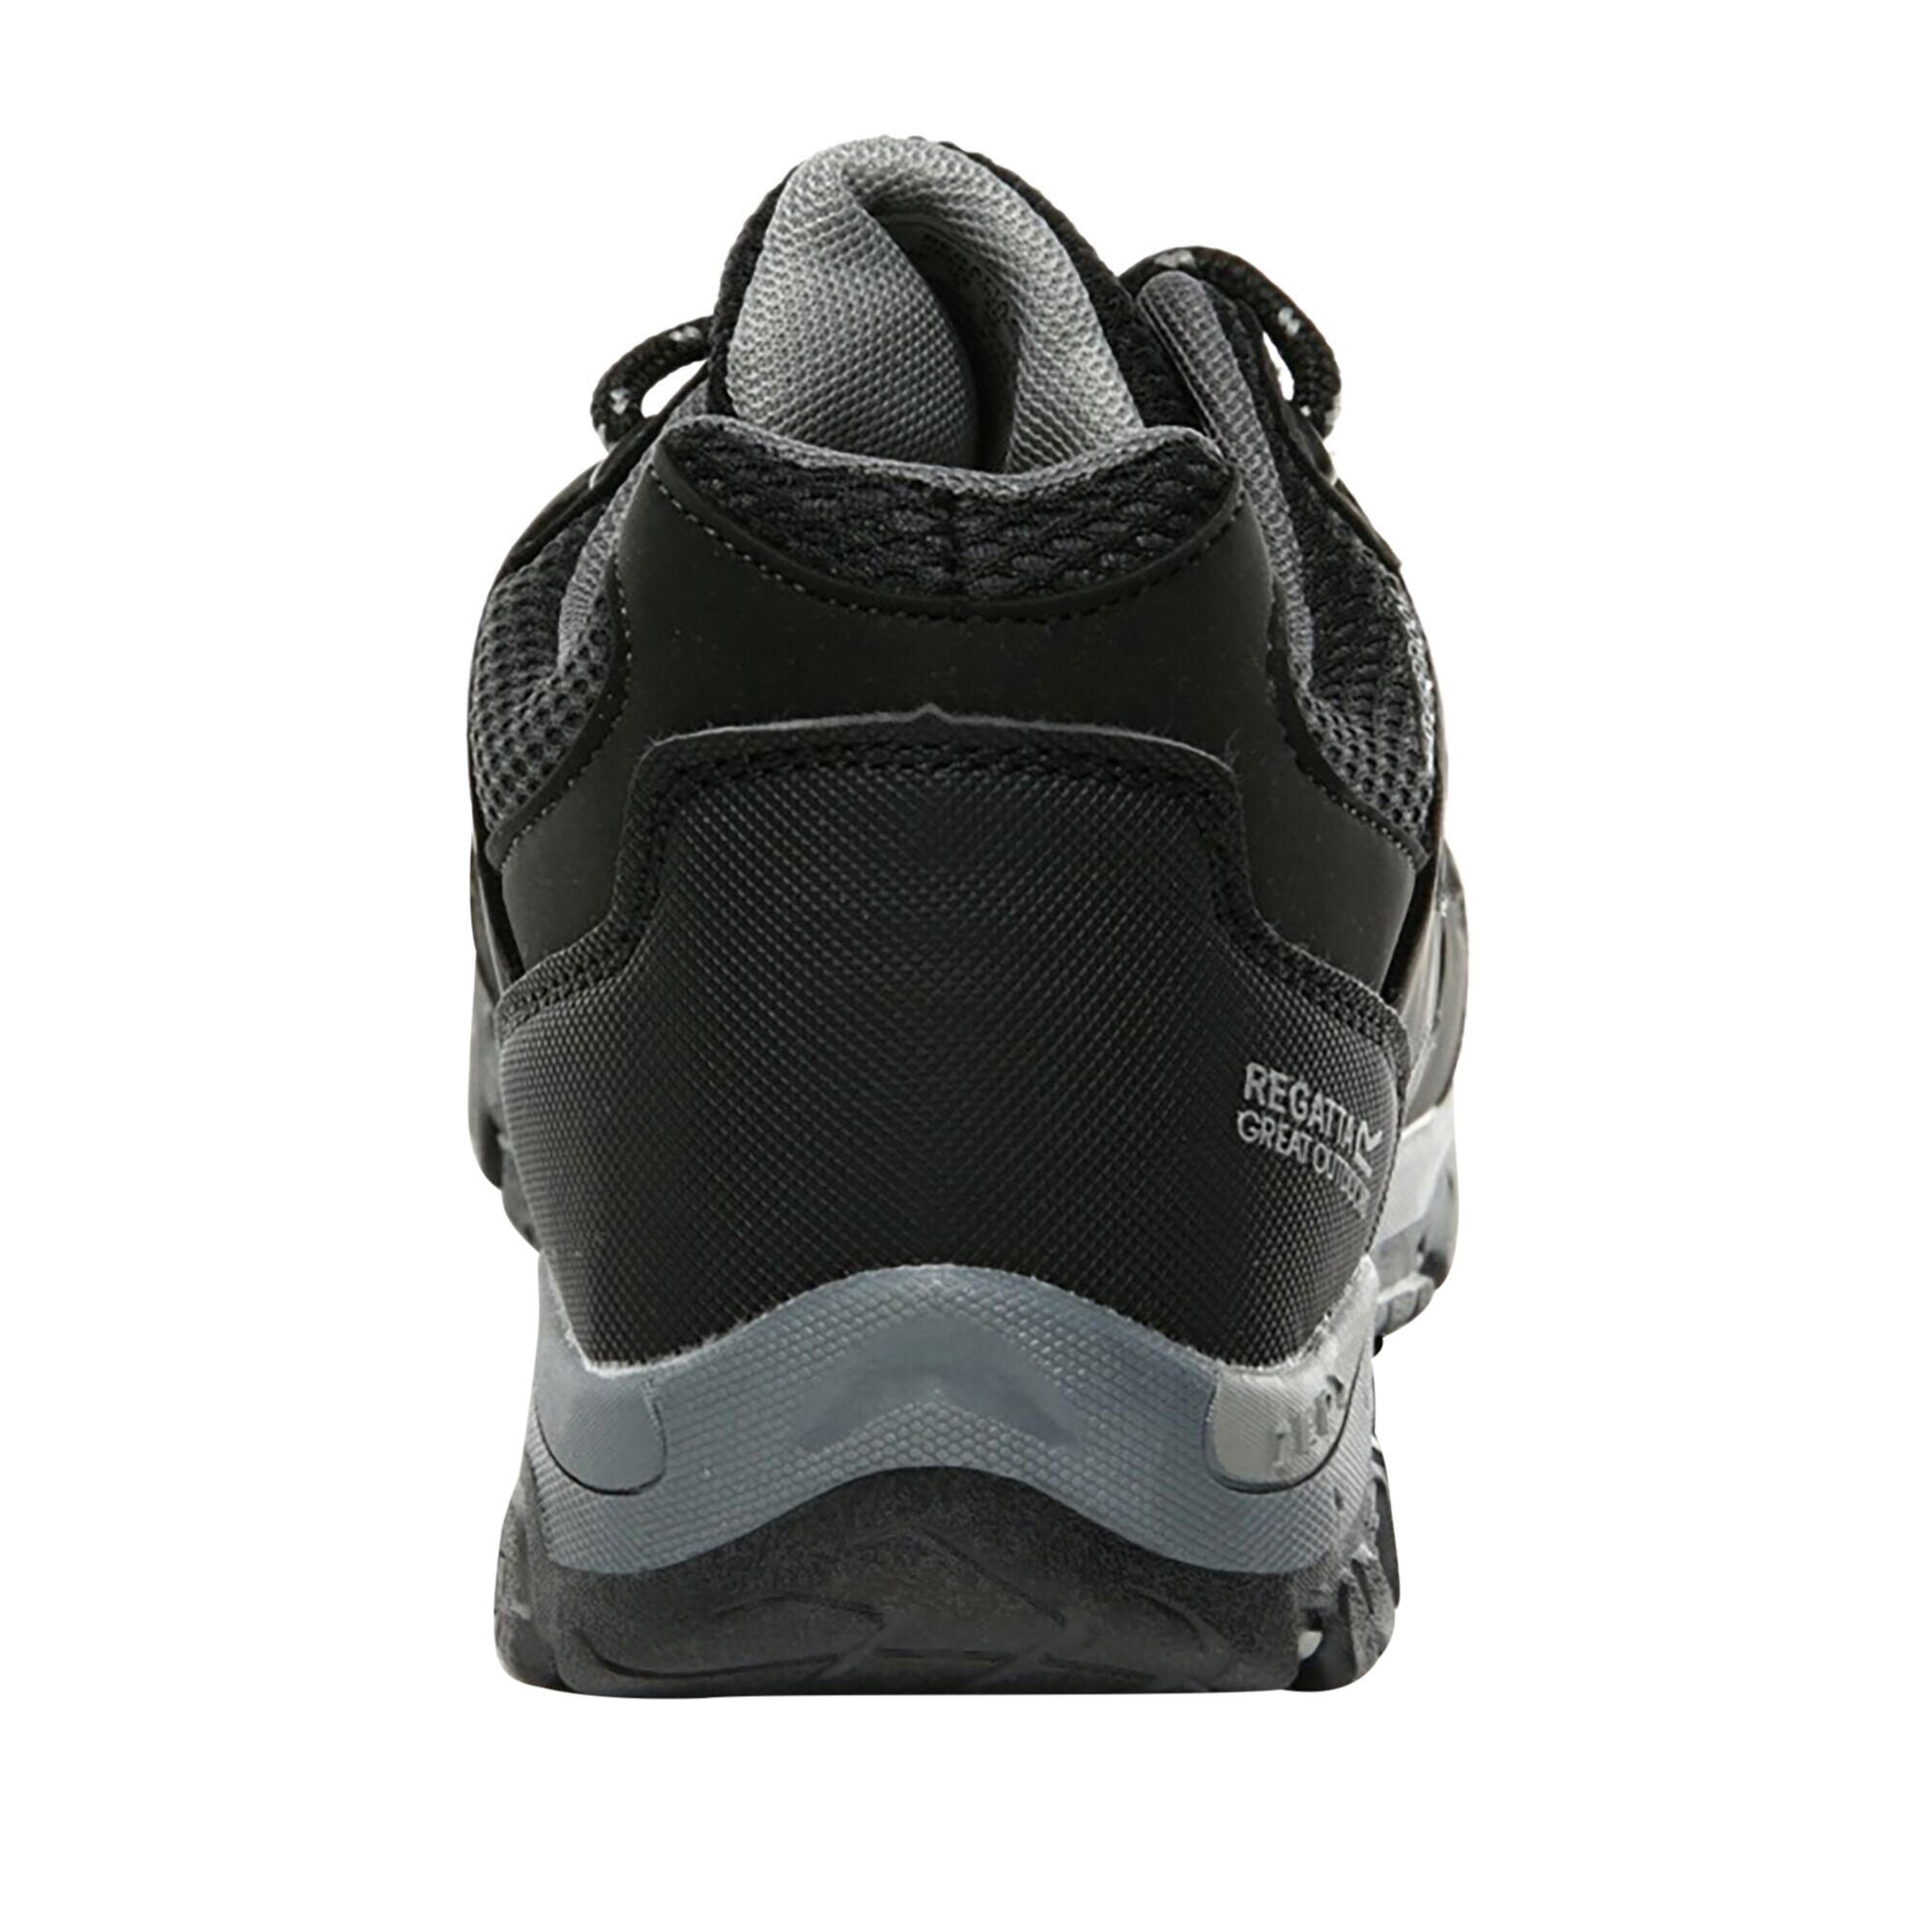 Childrens/Kids Holcombe Low Junior Hiking Boots (Black/Granite) 2/5